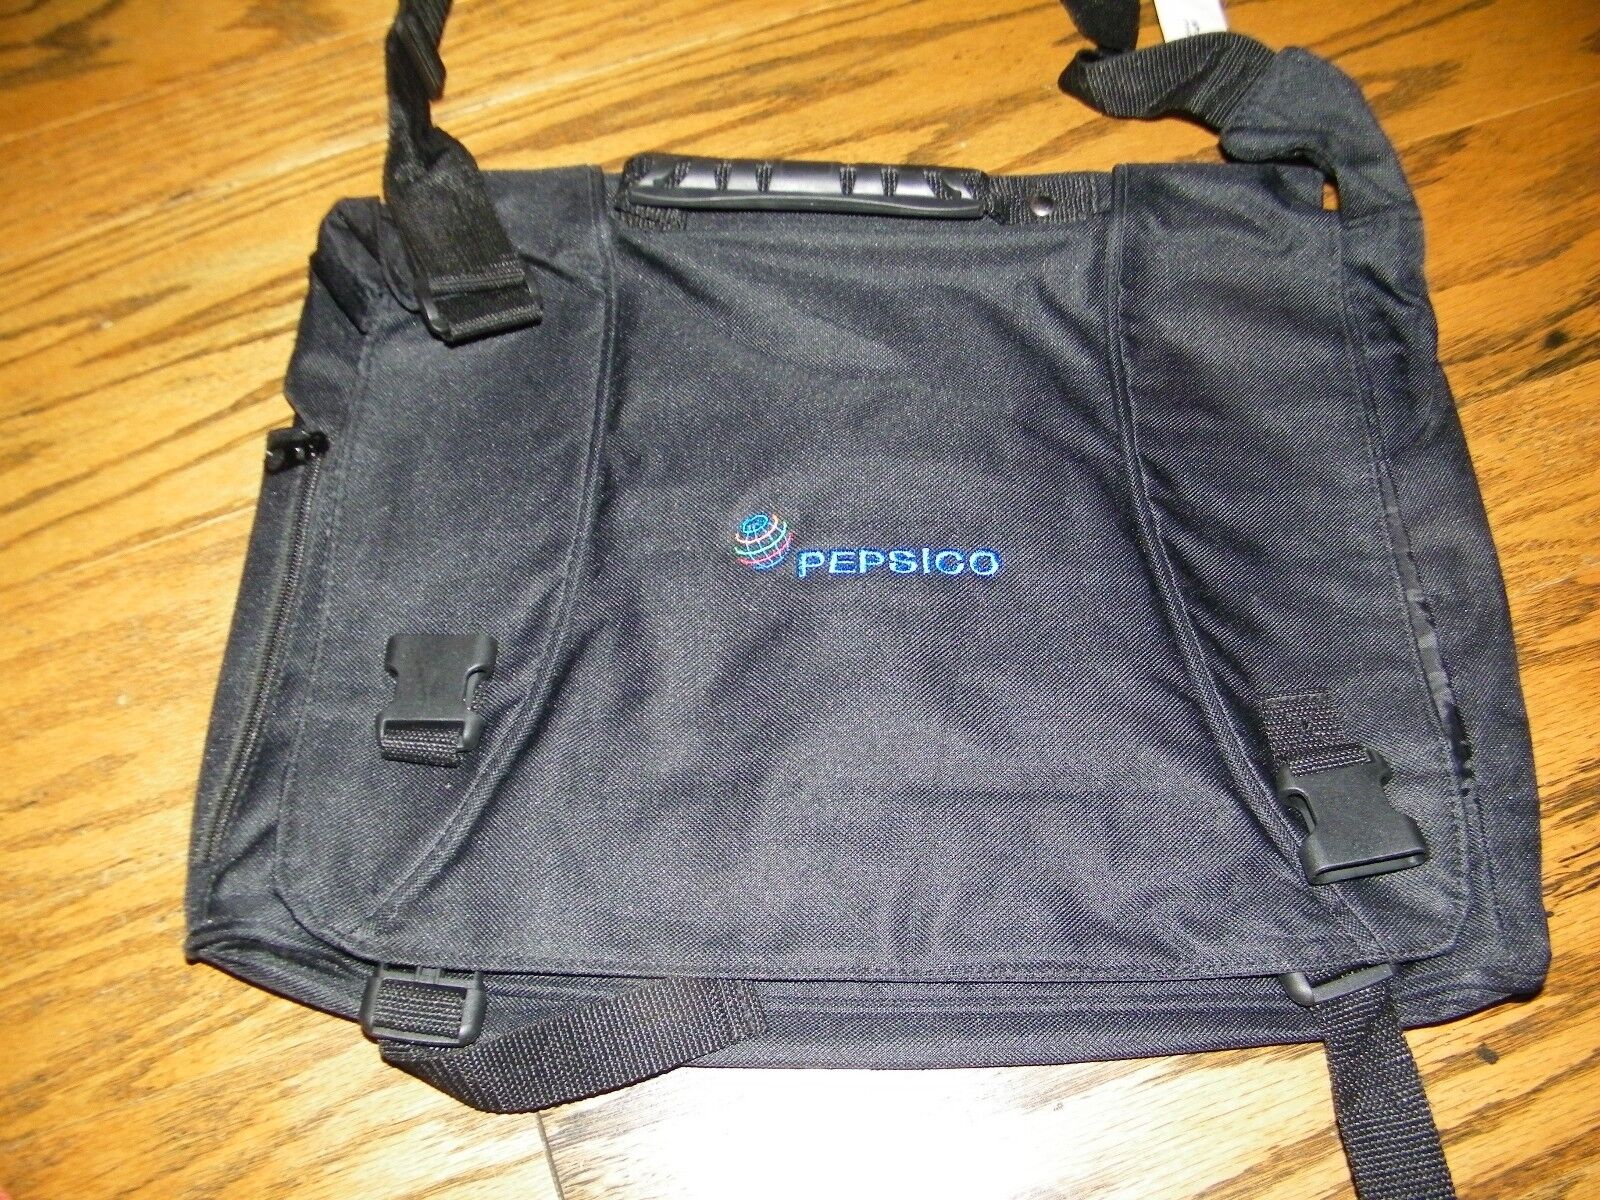 Pepsico Messenger Bag Laptop Bag with handle and strap Travelwell NWT Pepsi